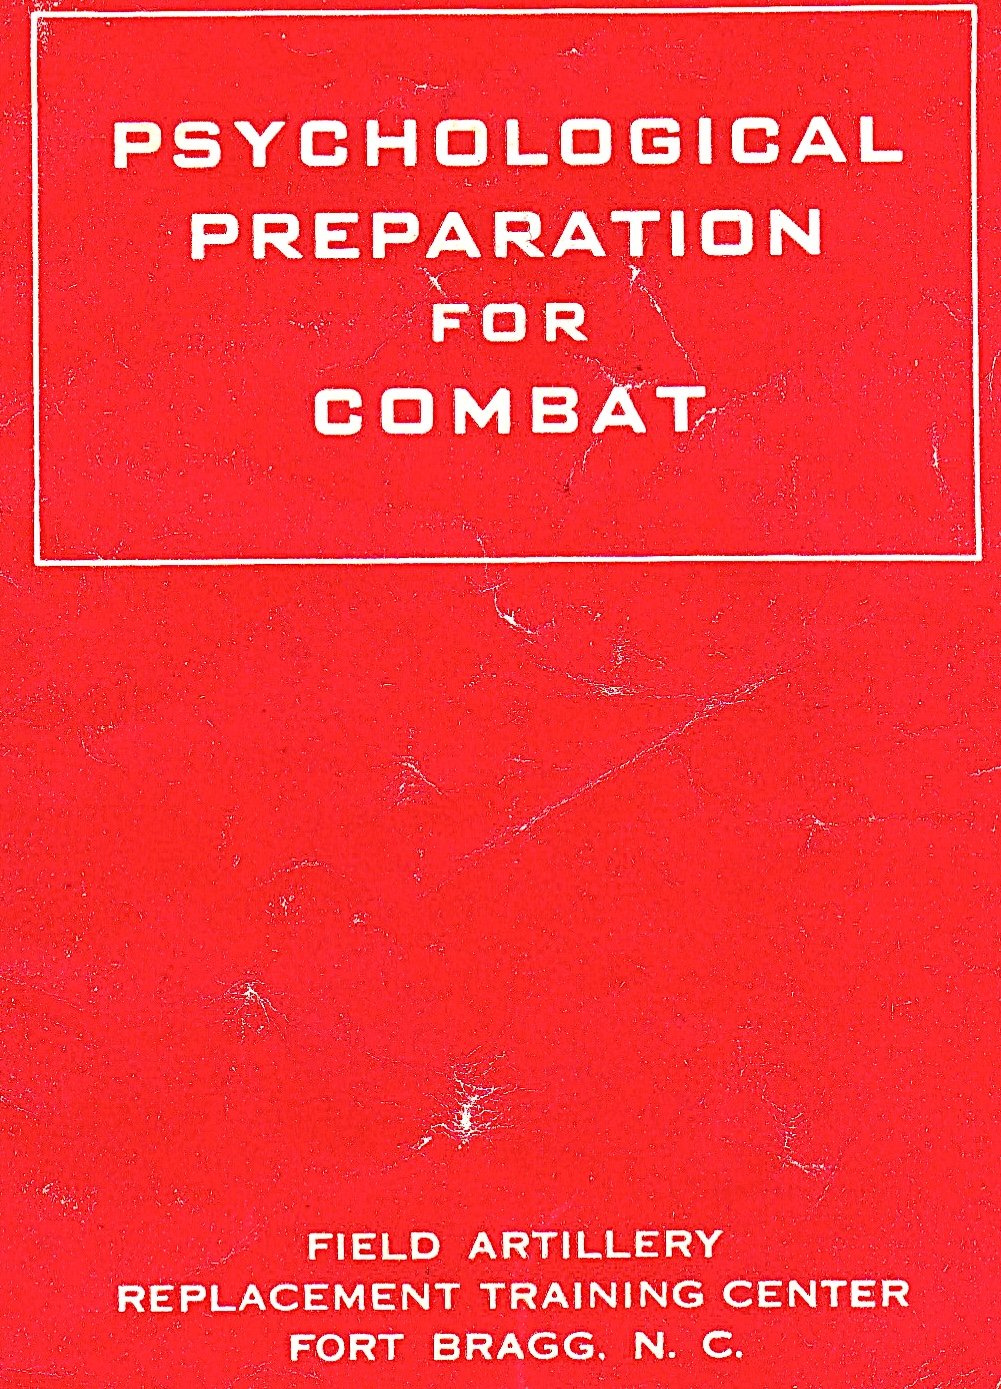 Psych prep for combat booklet.jpg